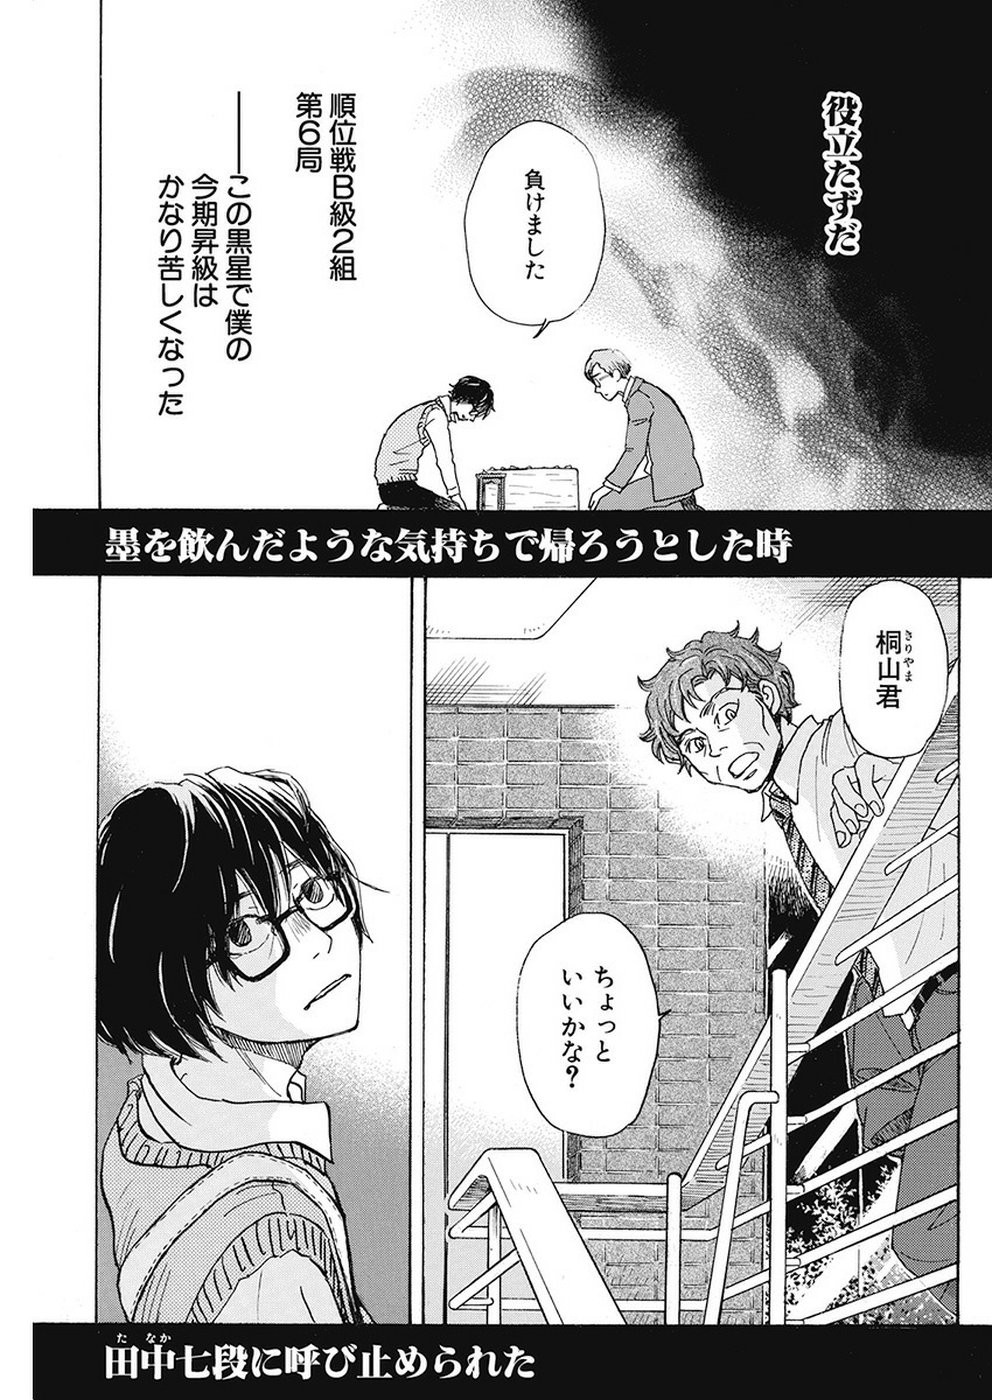 3 Gatsu no Lion - Chapter 166 - Page 3